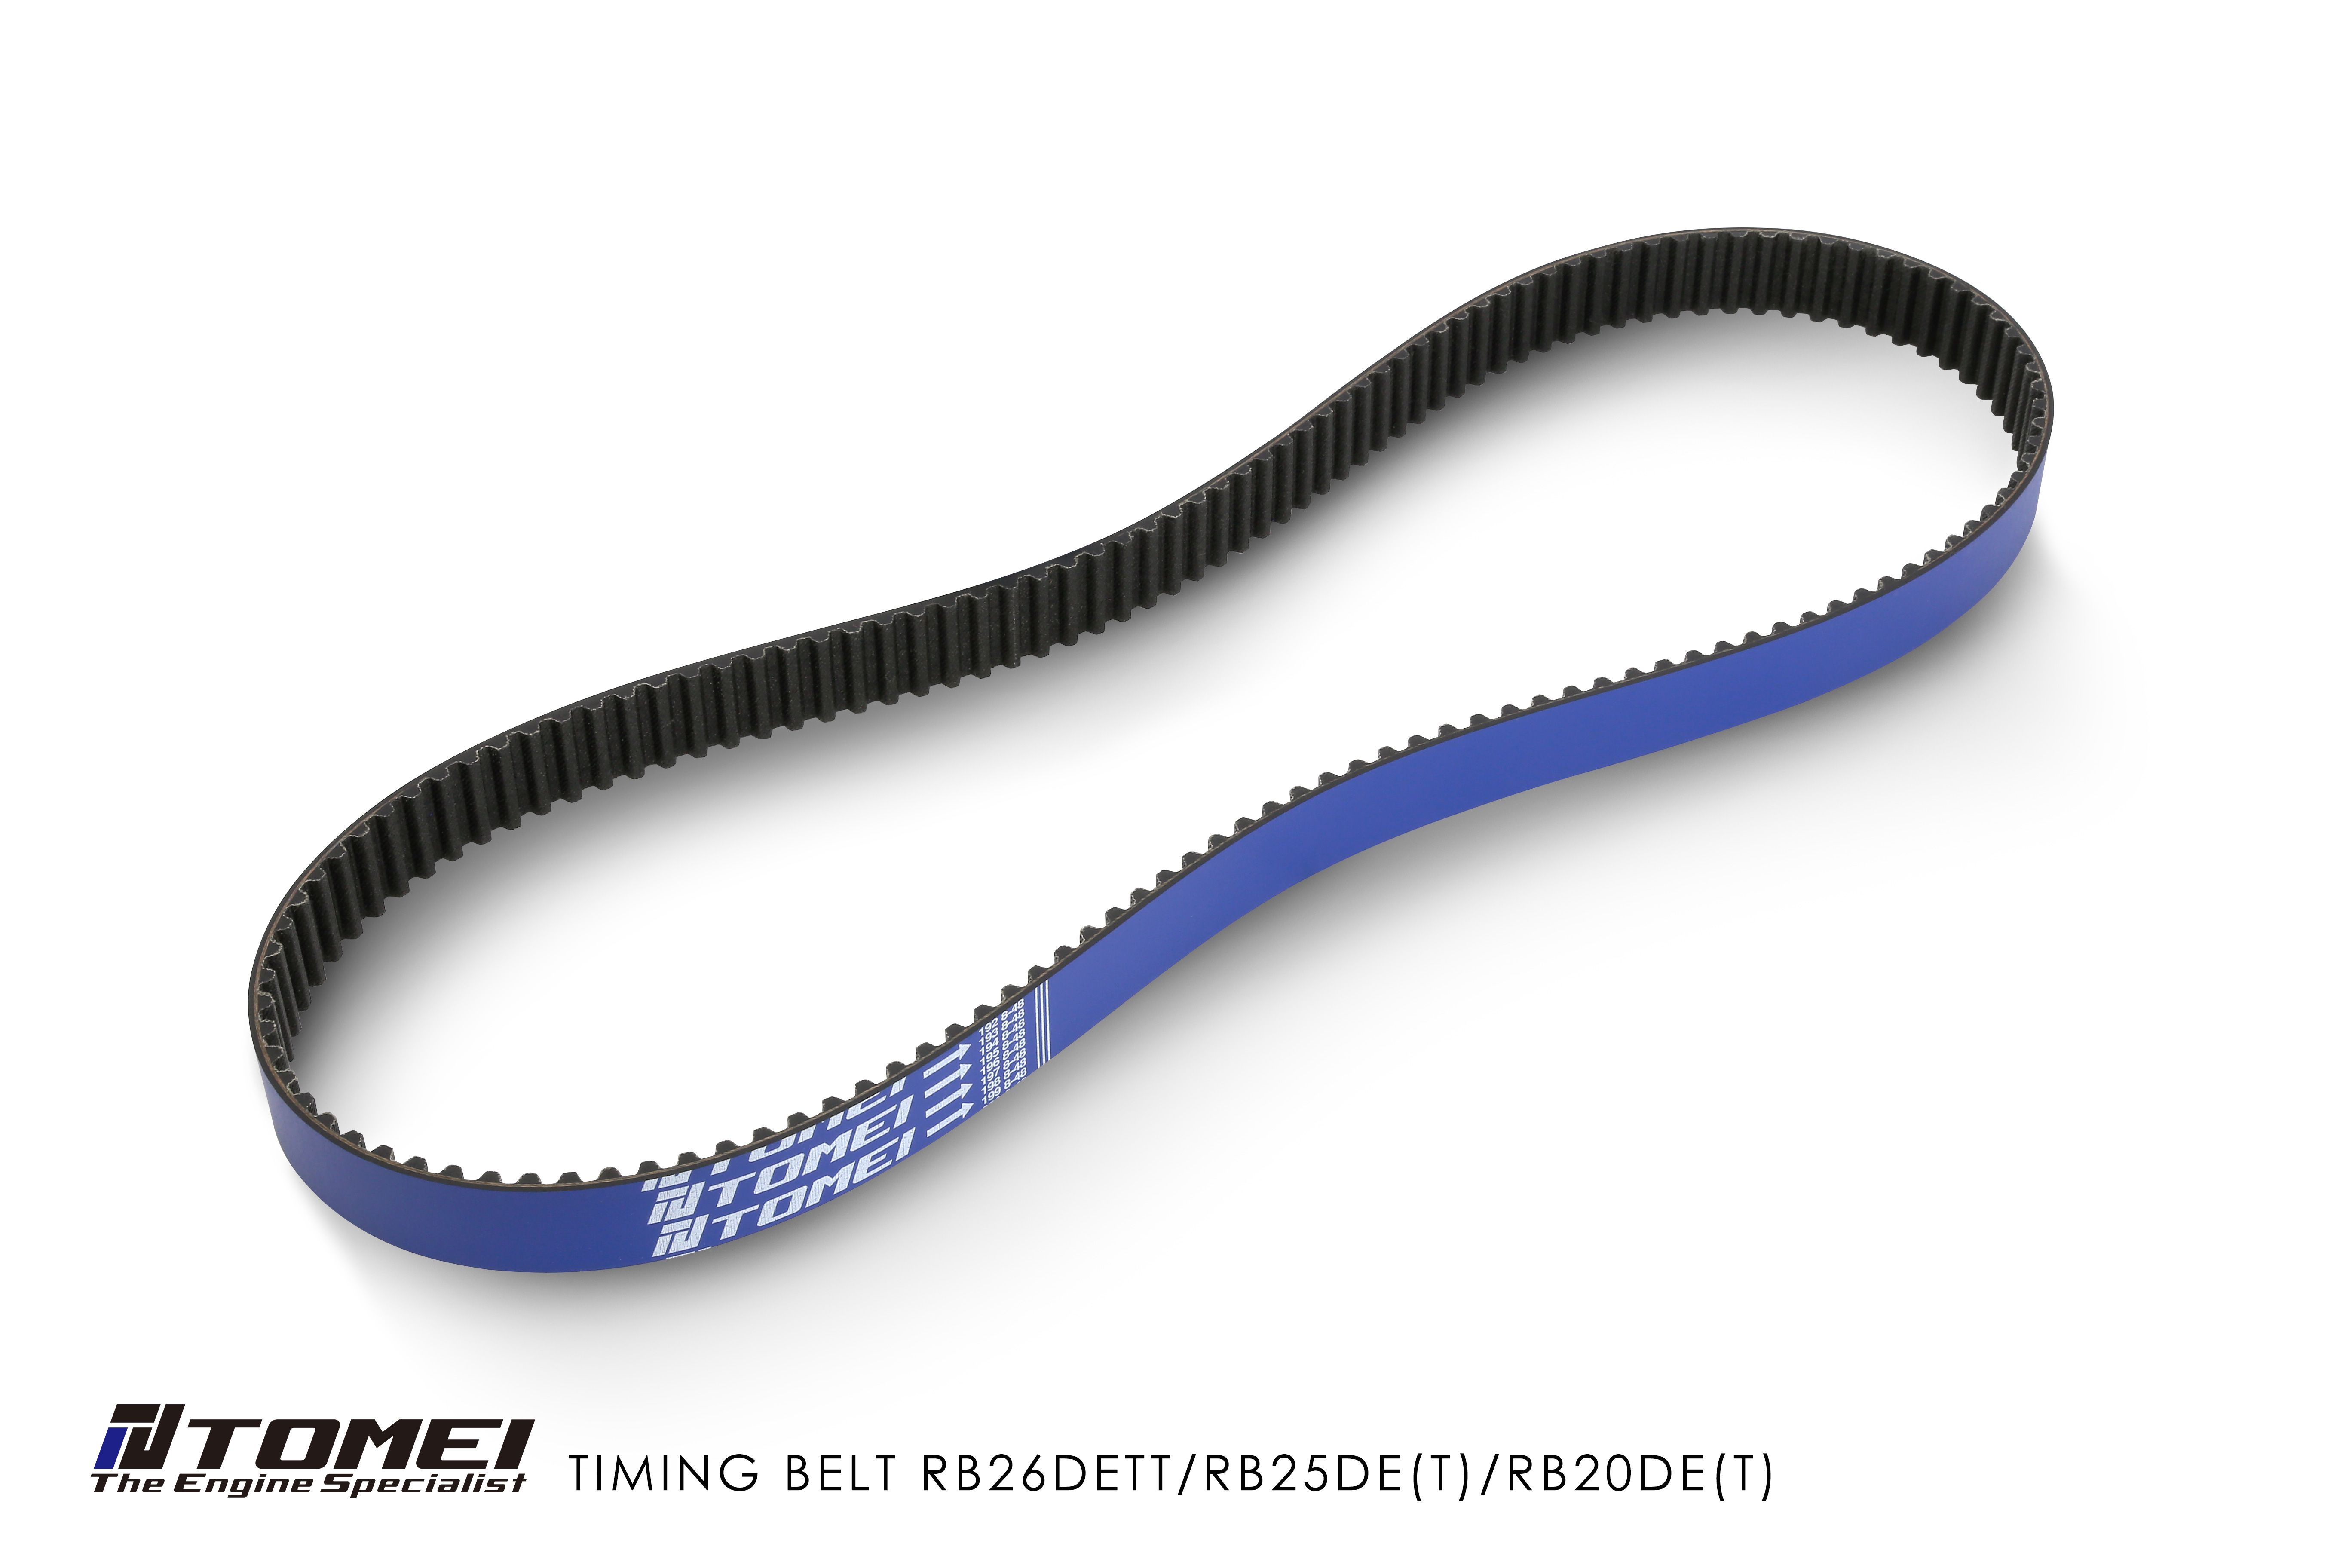 Tomei Performance Timing Belt RB26DETT / RB25DE(T) / RB20DE(T) - Nissan Skyline GT-R R32 R33 R34